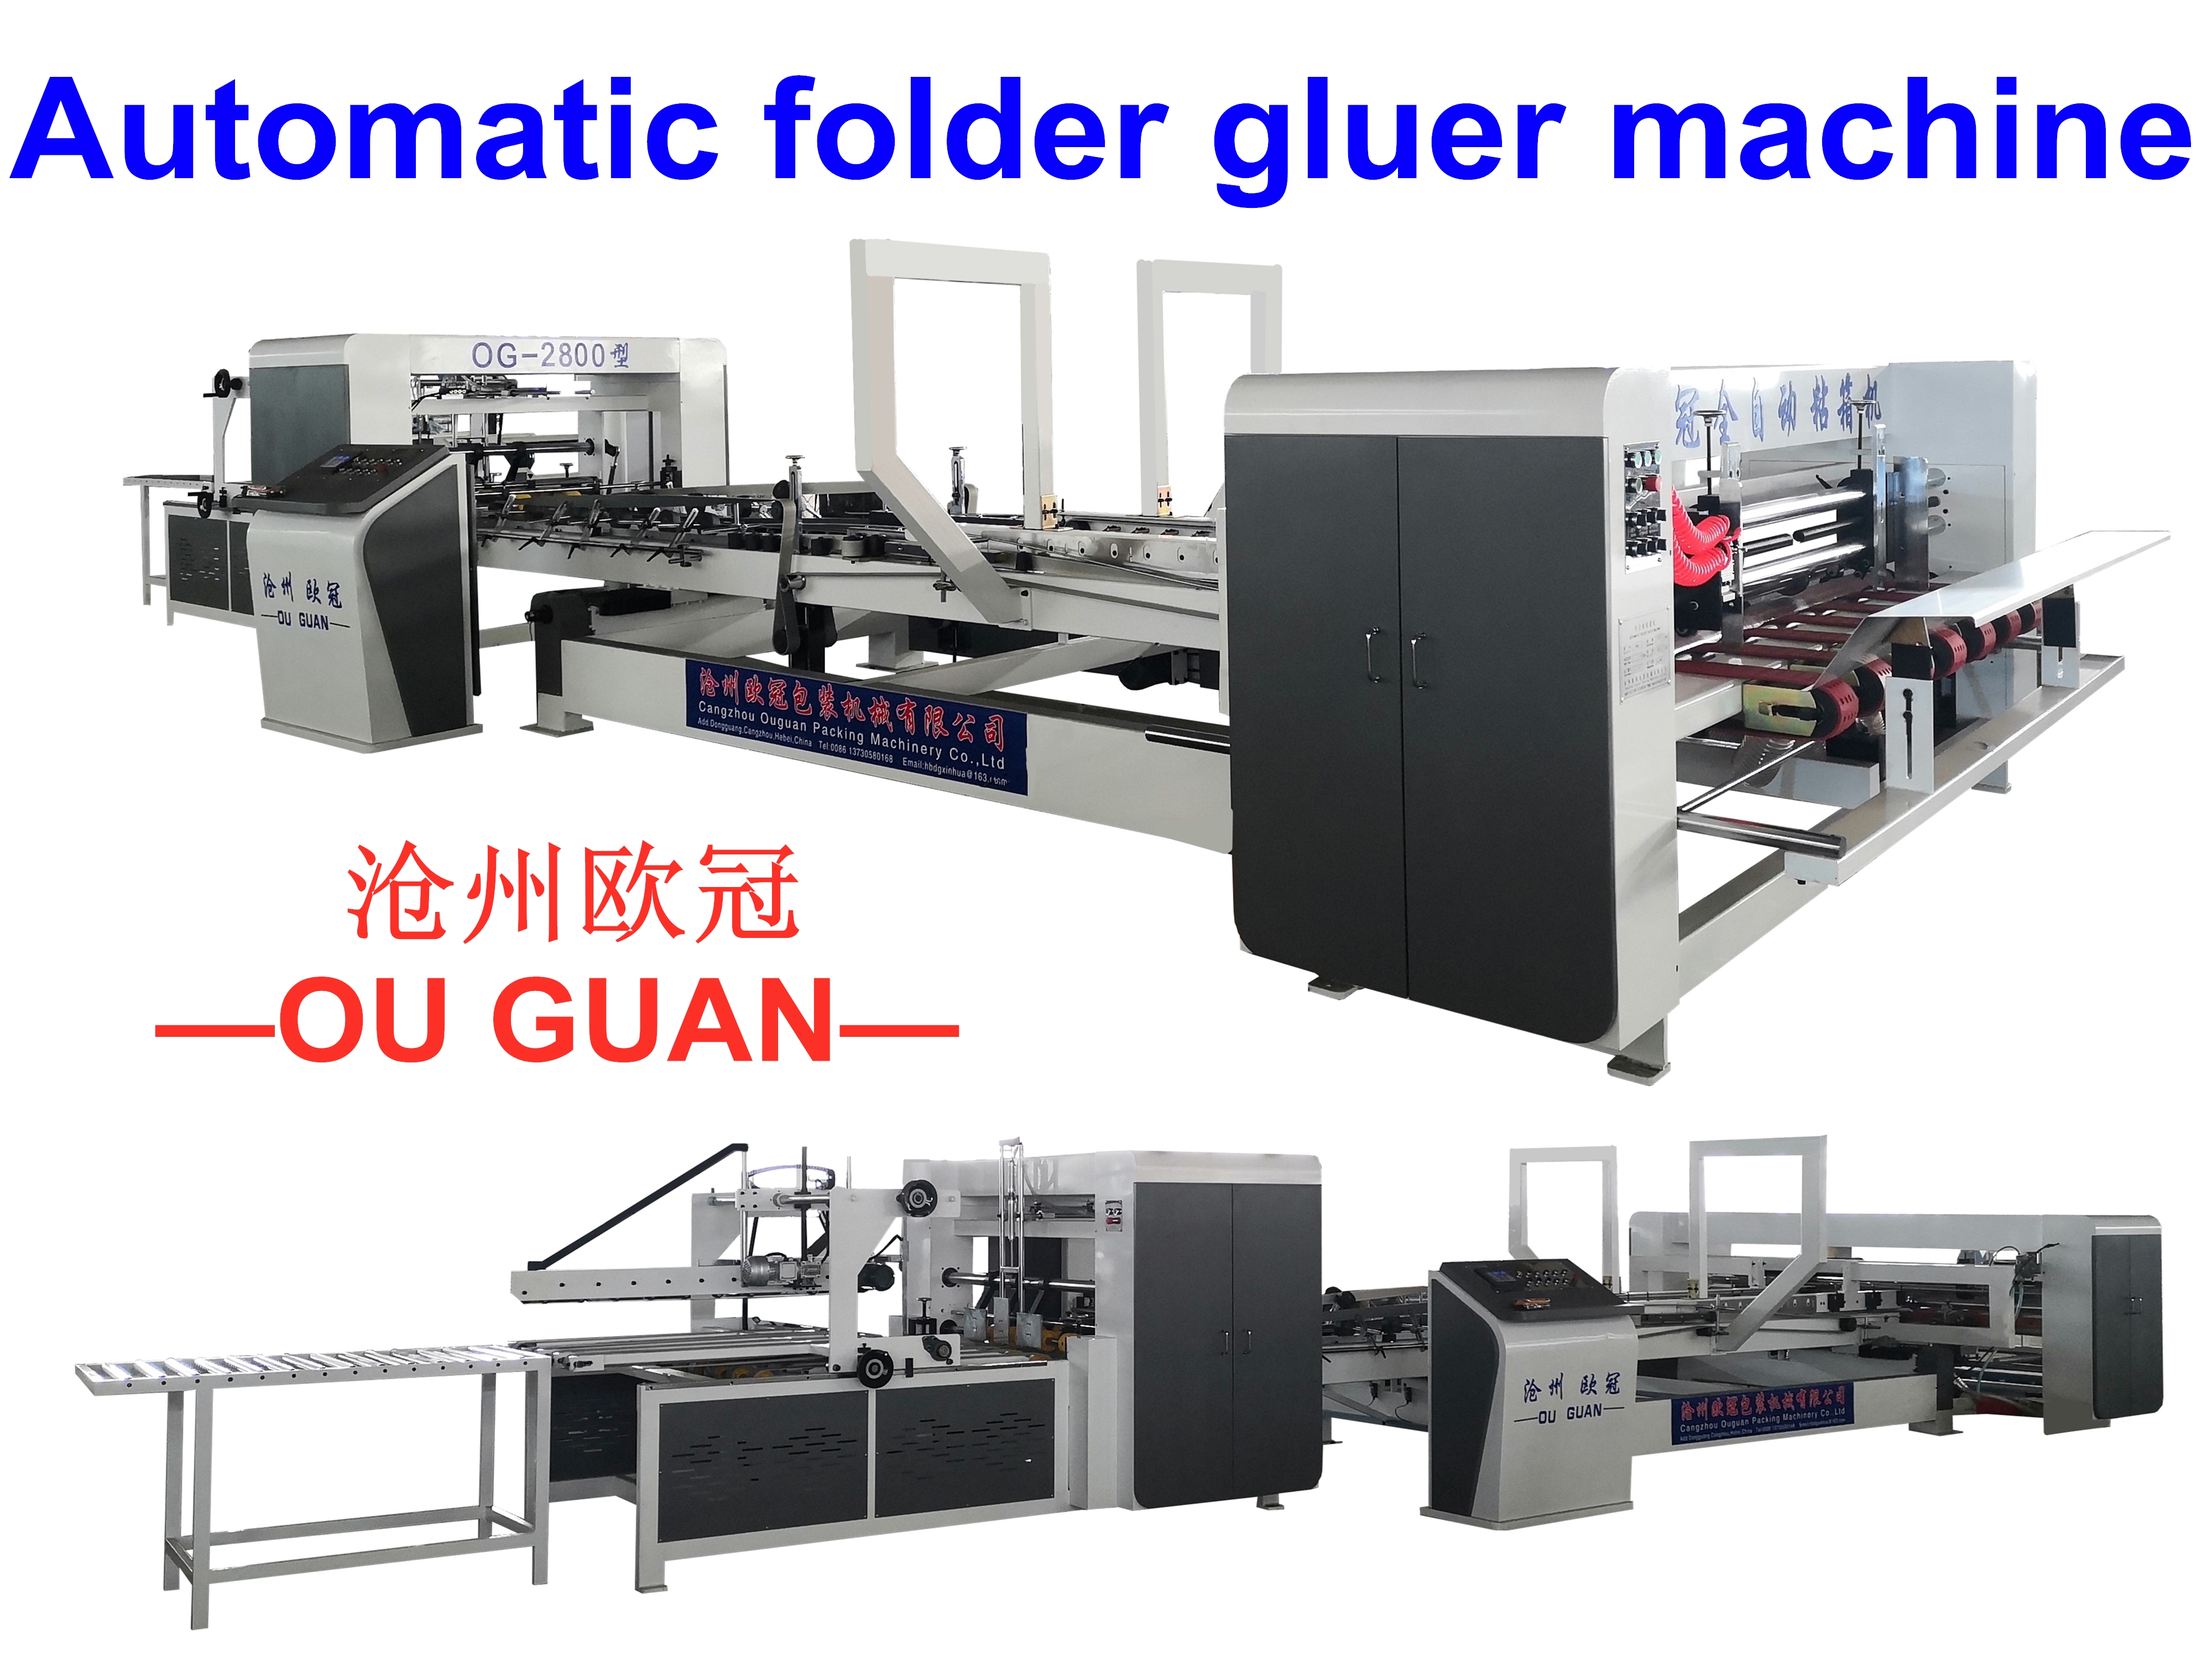 High quality professional manufacturing automatic folder gluer machine